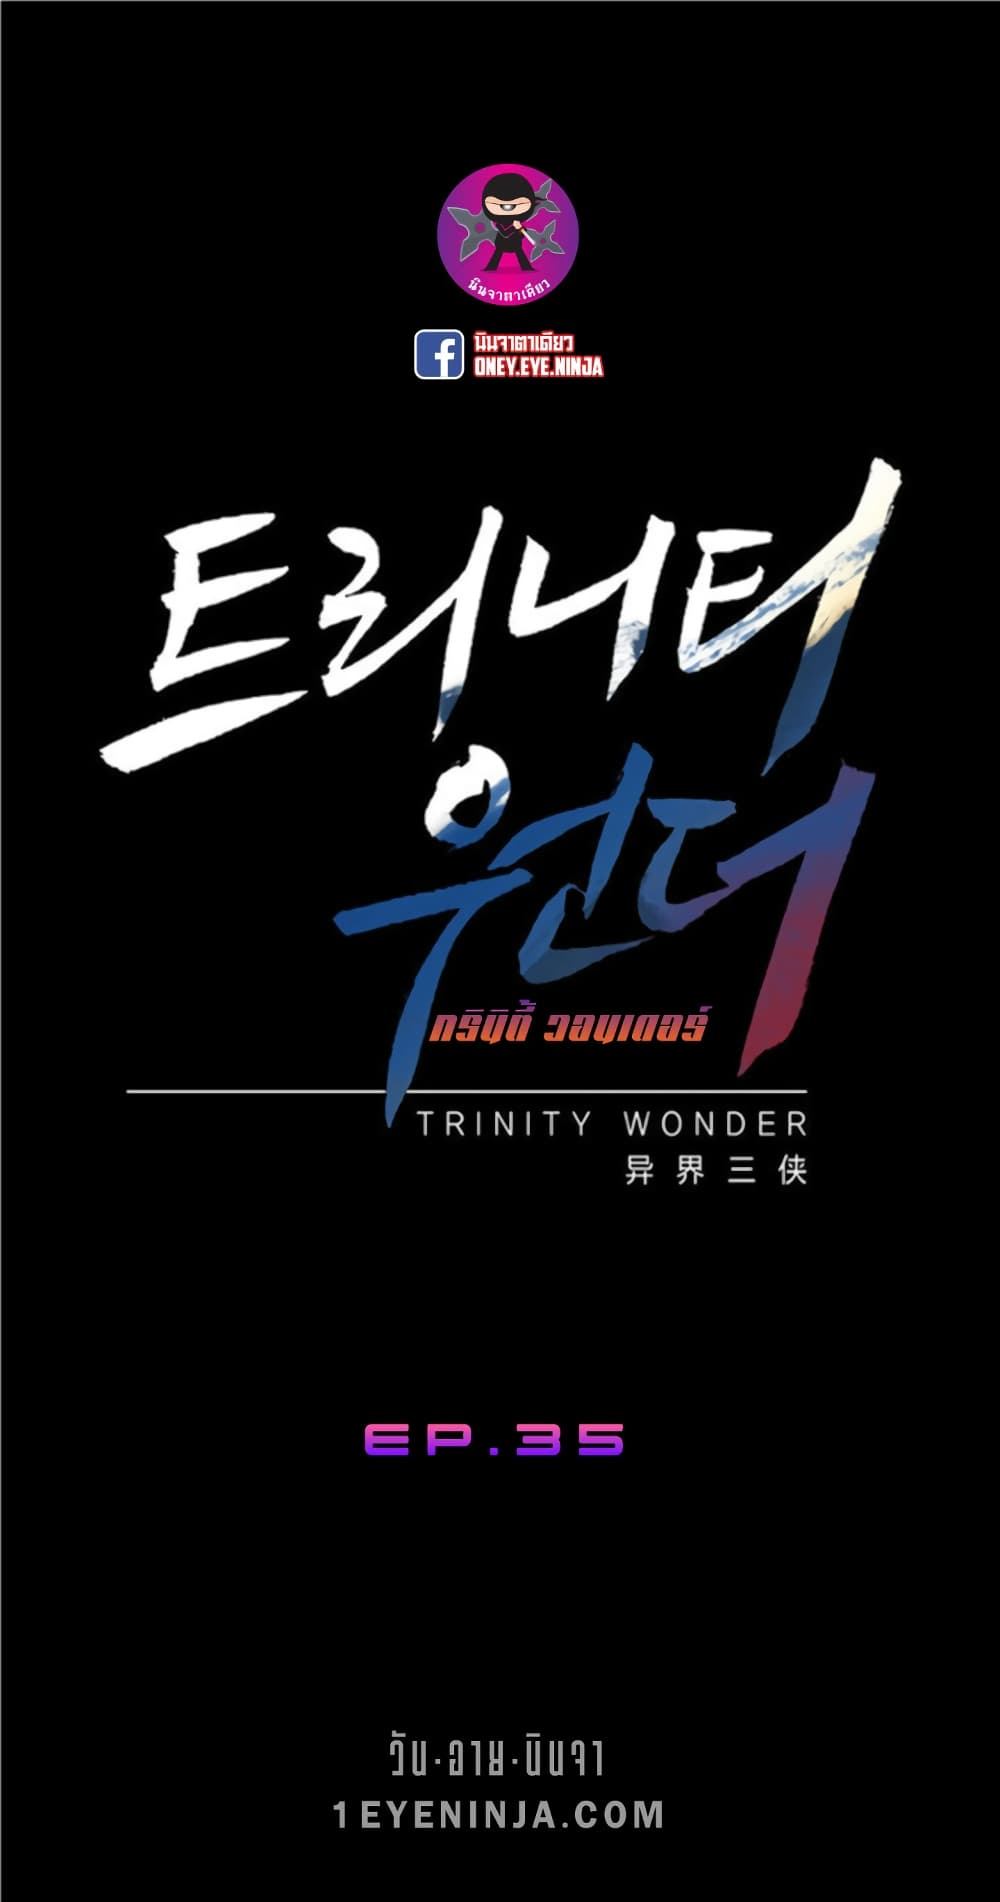 Trinity Wonder 35 (2)